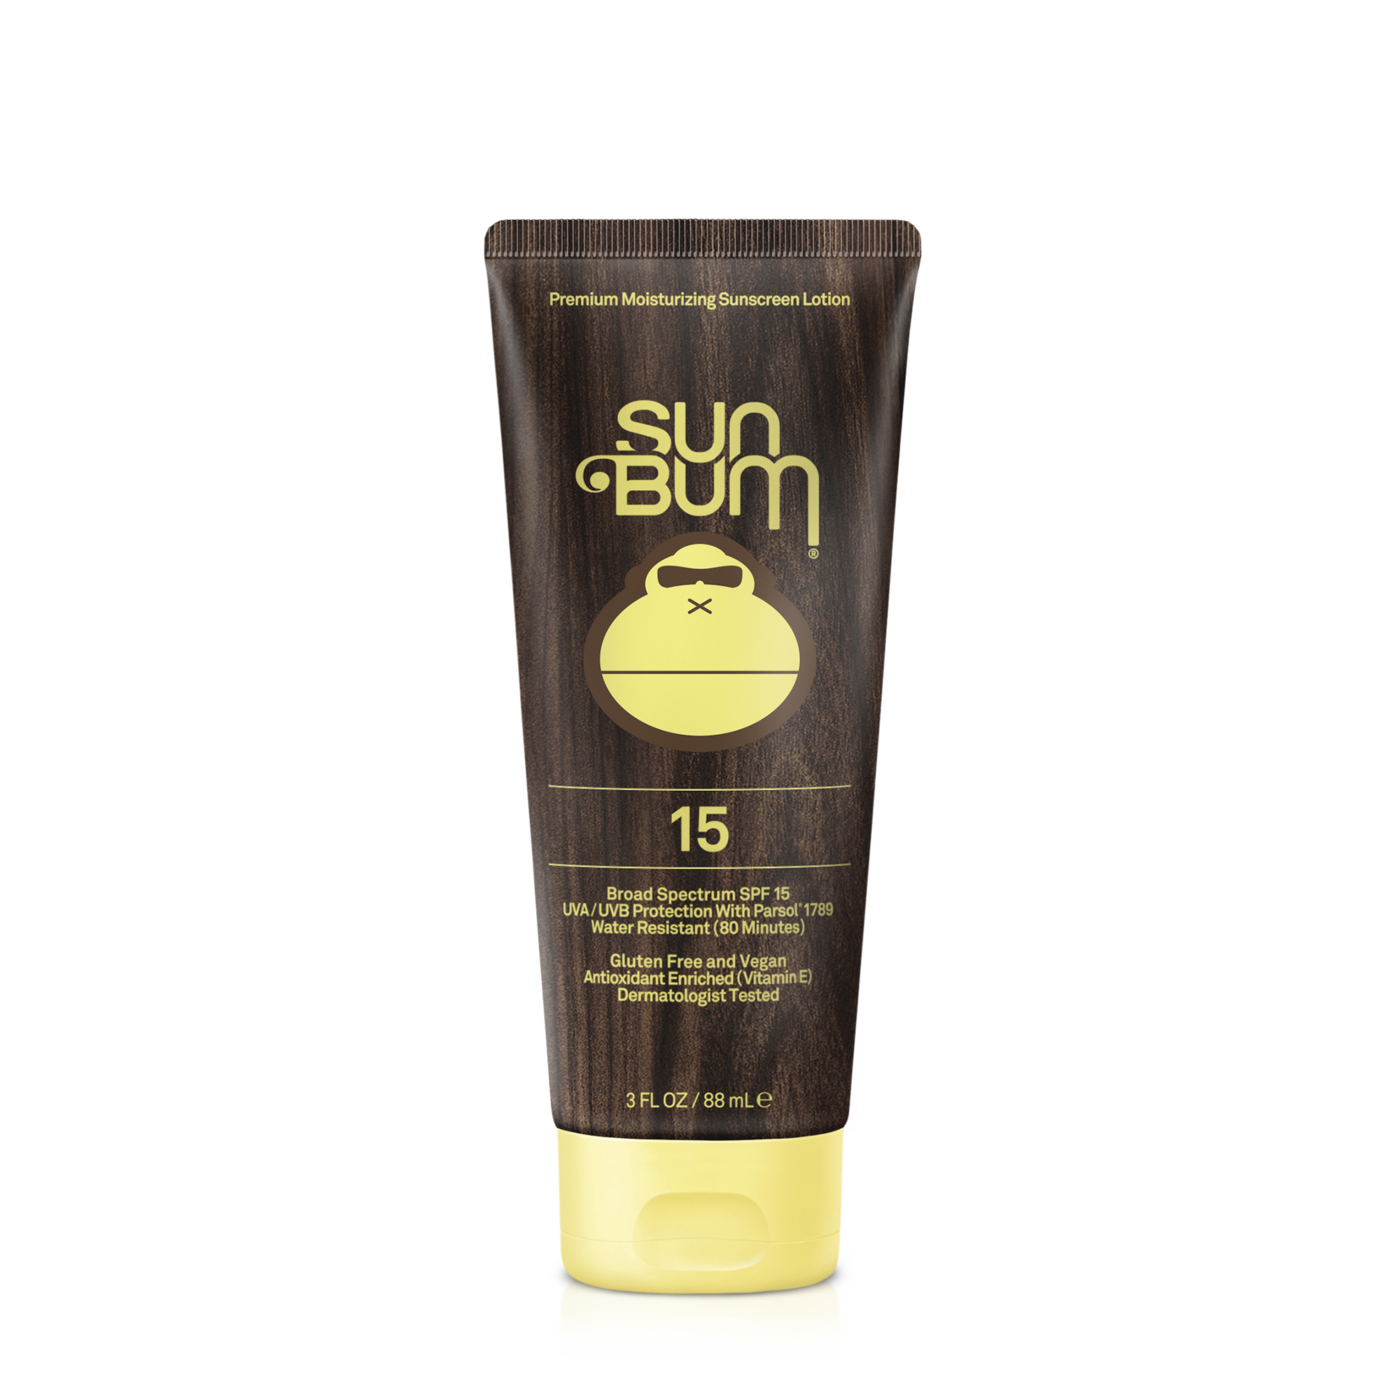 Sun Bum | Original Sunscreen Lotion SPF 15 - 3oz.